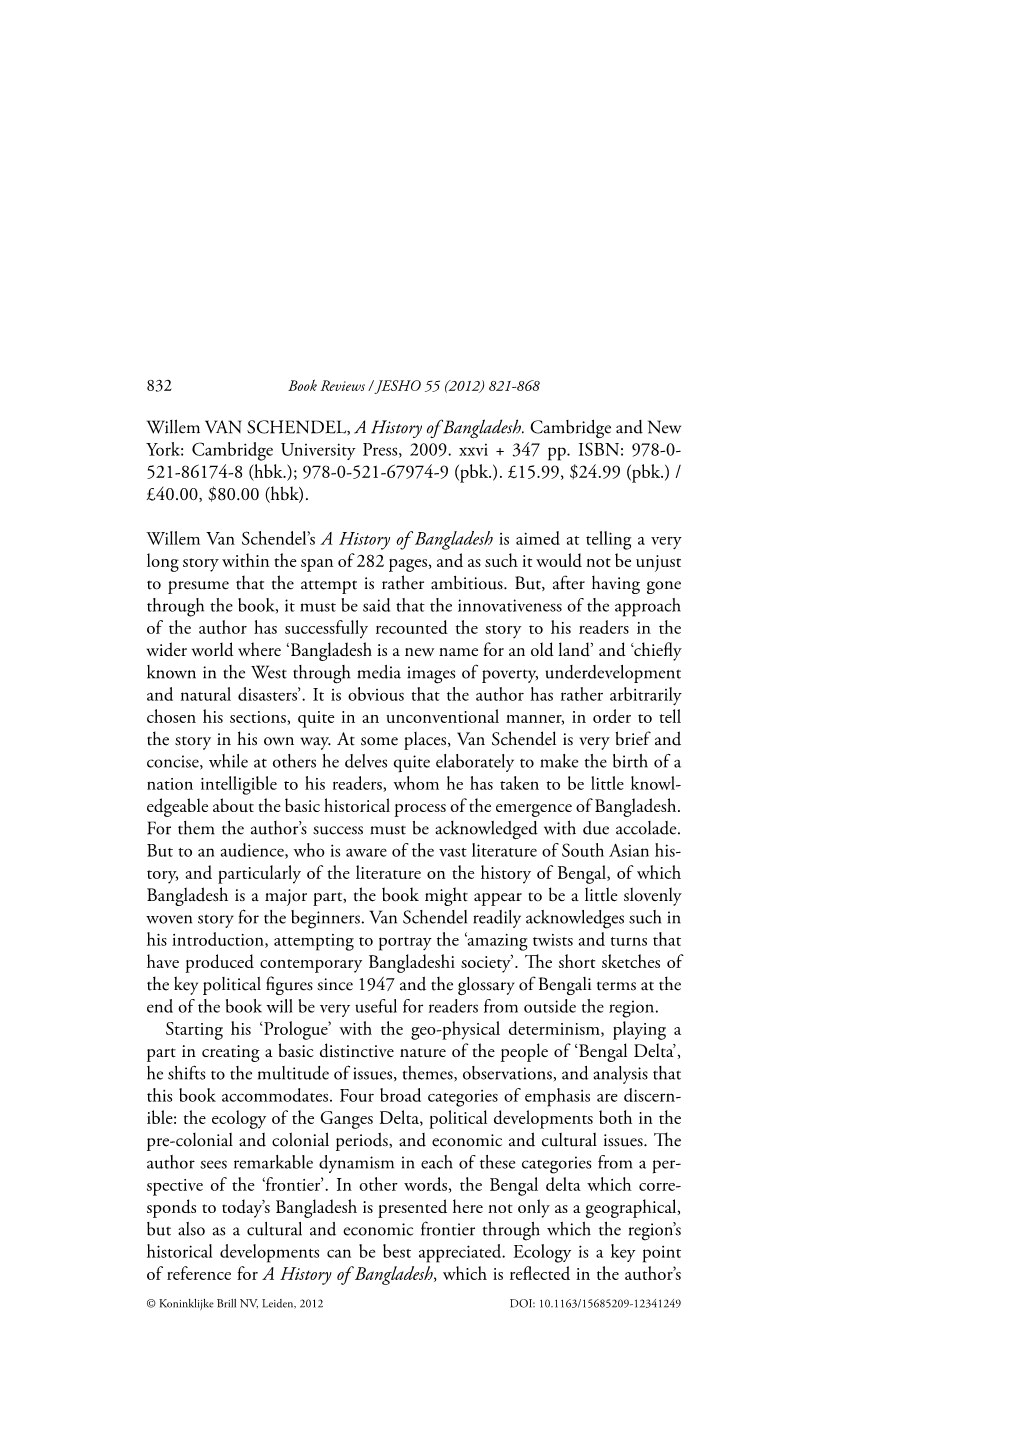 Willem VAN SCHENDEL, a History of Bangladesh. Cambridge and New York: Cambridge University Press, 2009